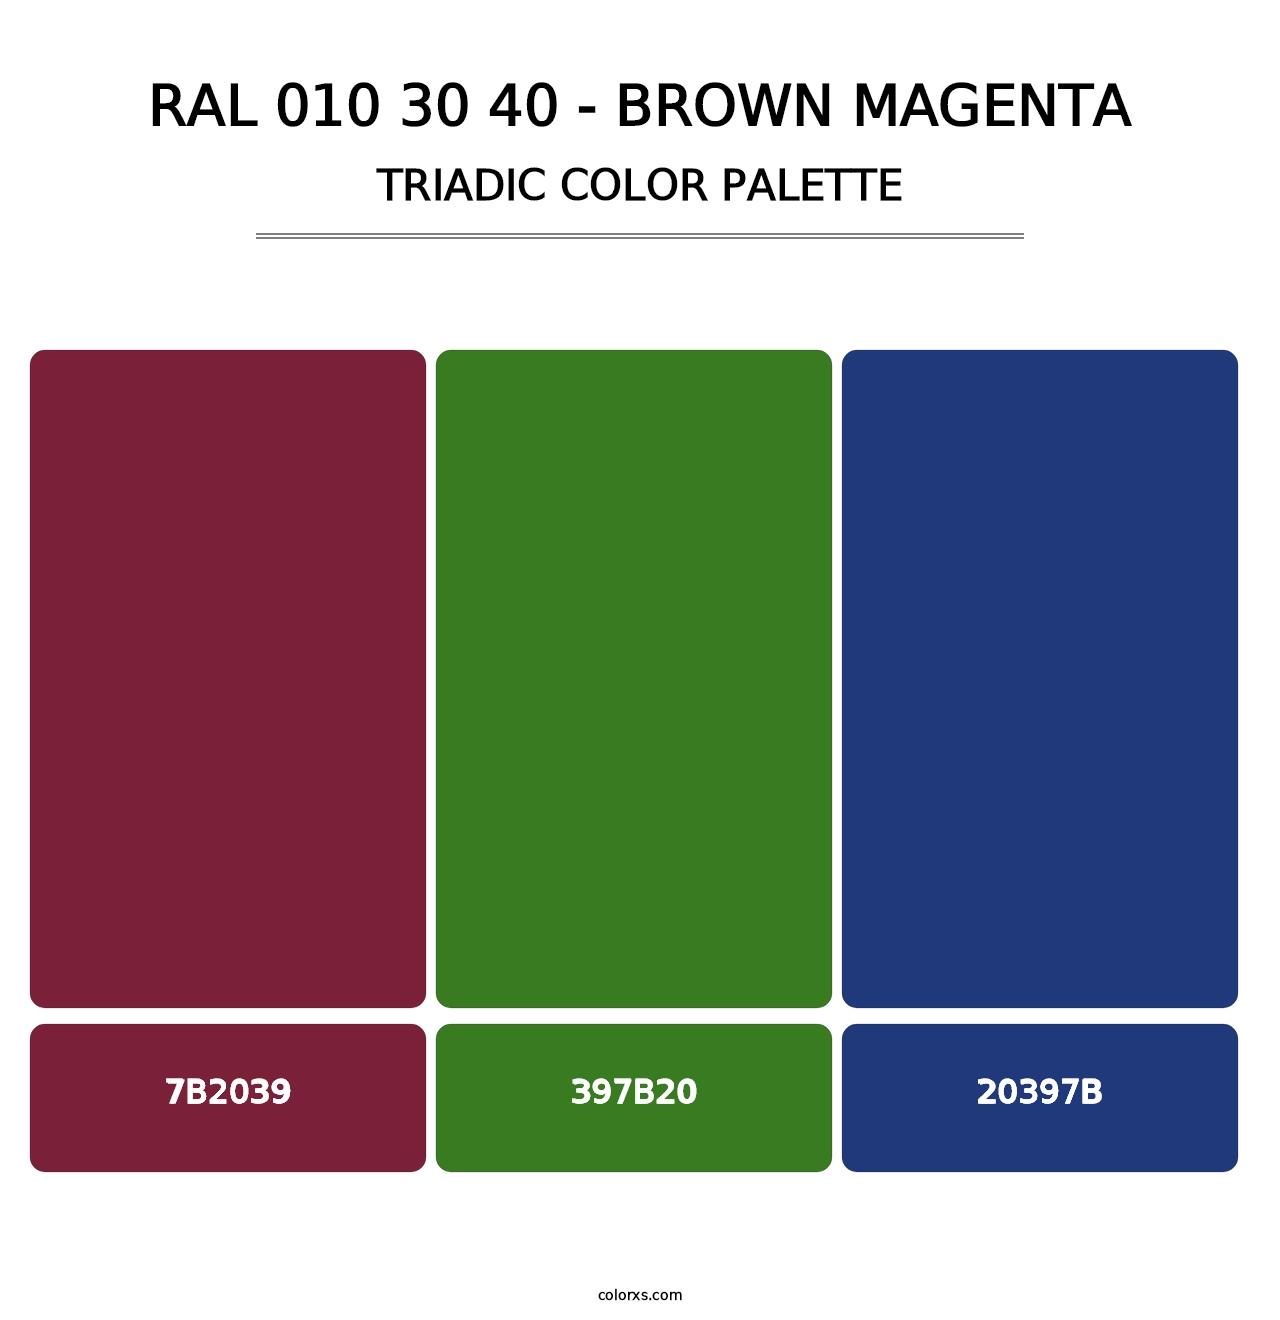 RAL 010 30 40 - Brown Magenta - Triadic Color Palette